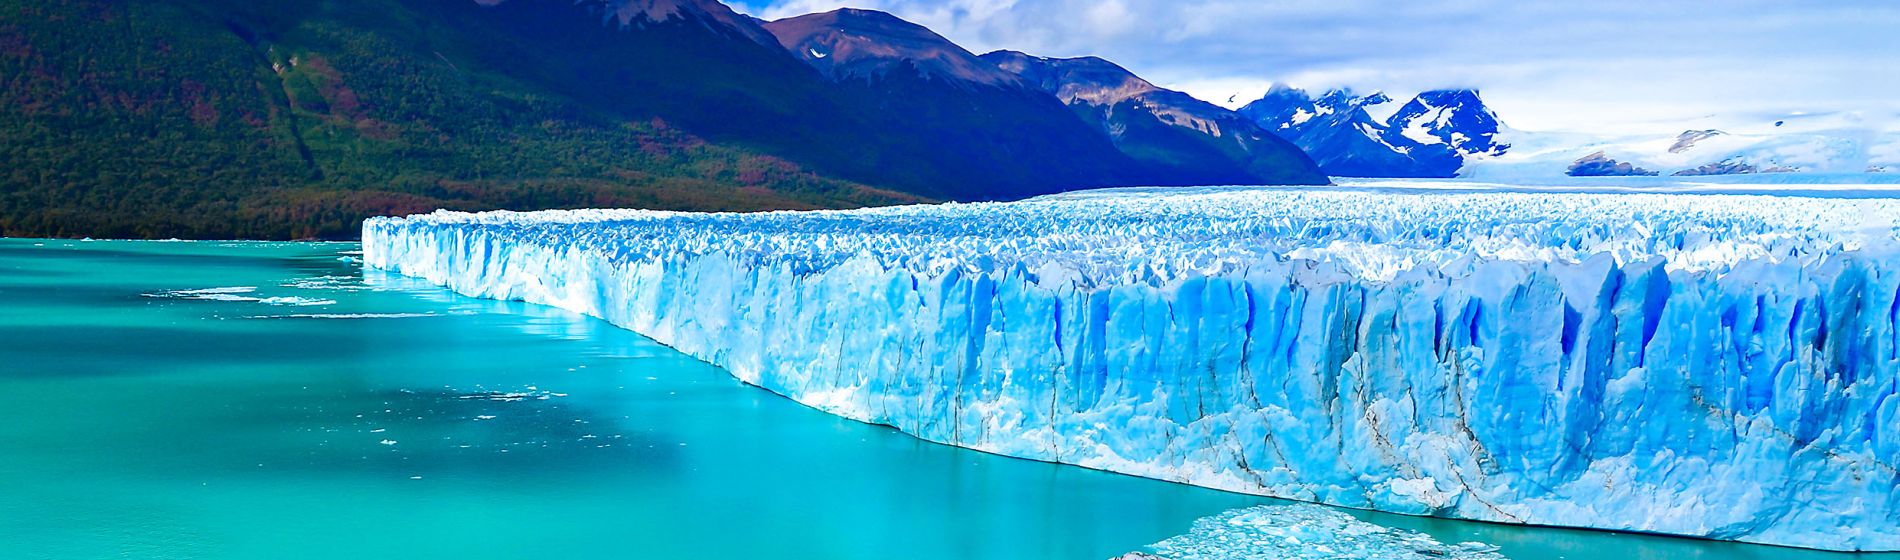 perito_moreno_glacier_in_patagonia_argentina.jpg